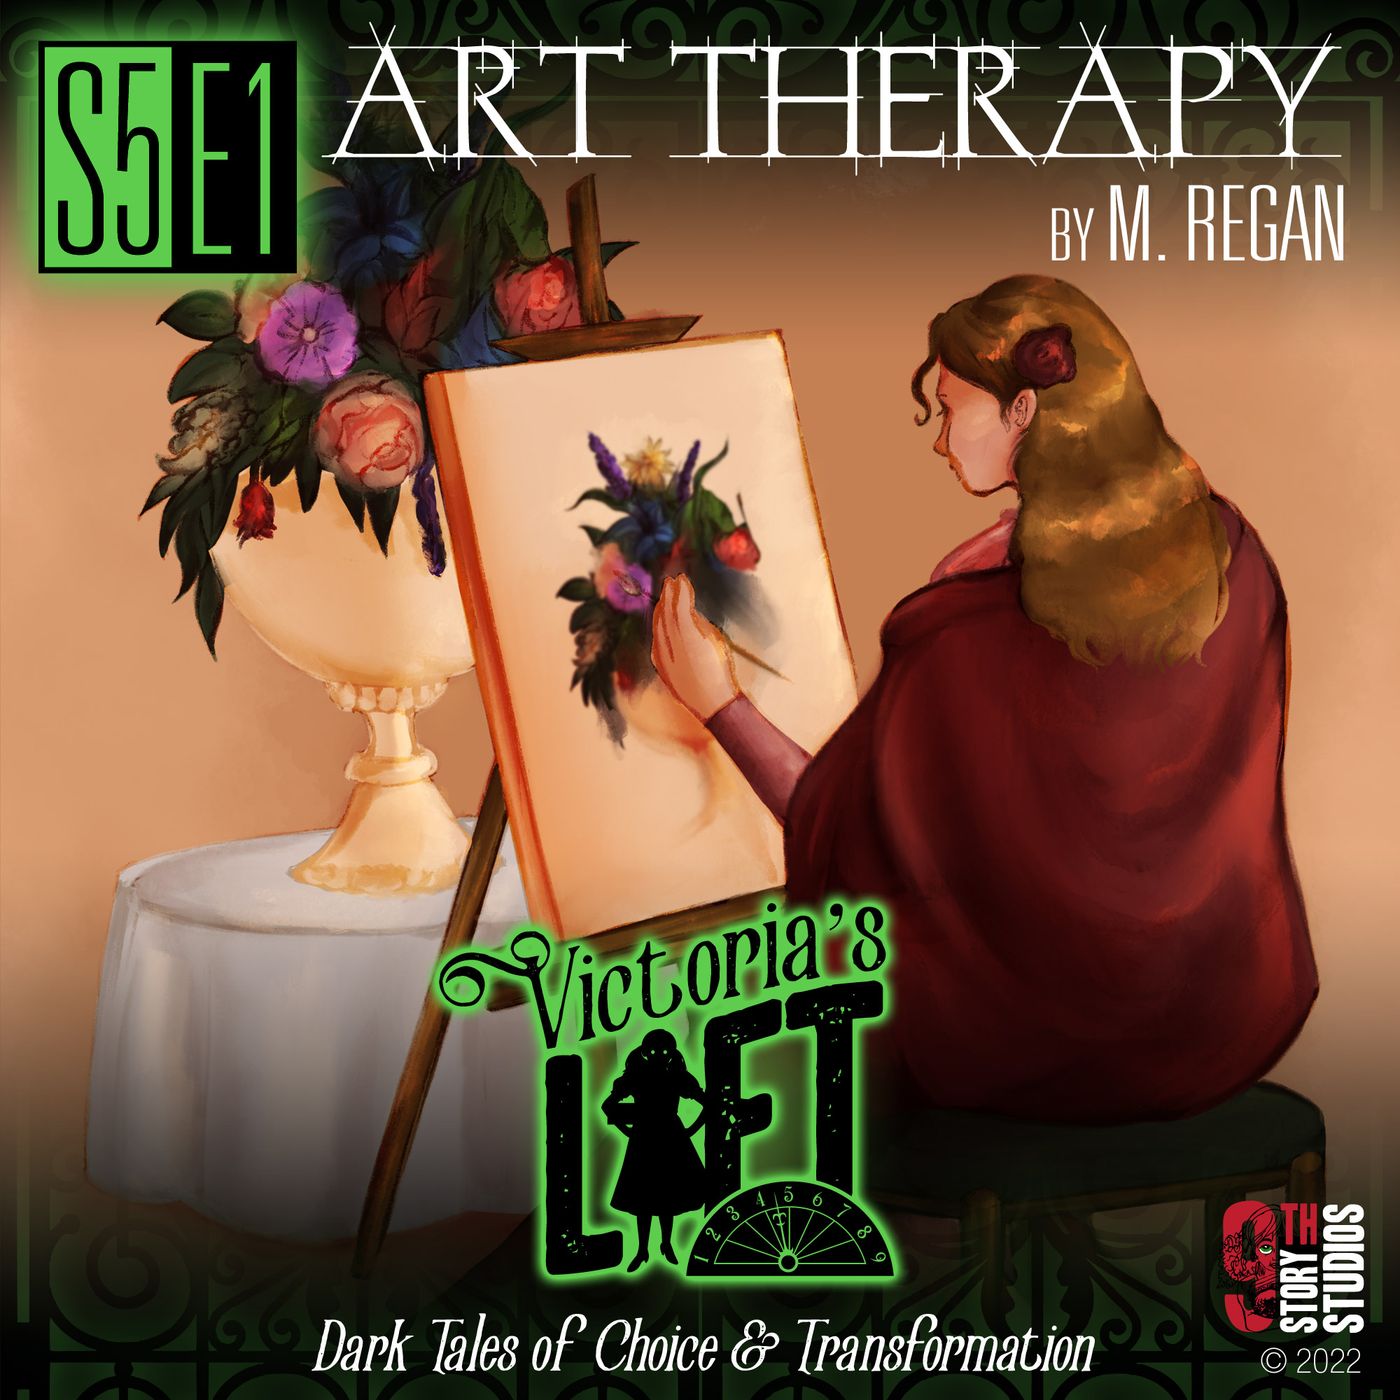 S5E1: "Art Therapy", by M. Regan